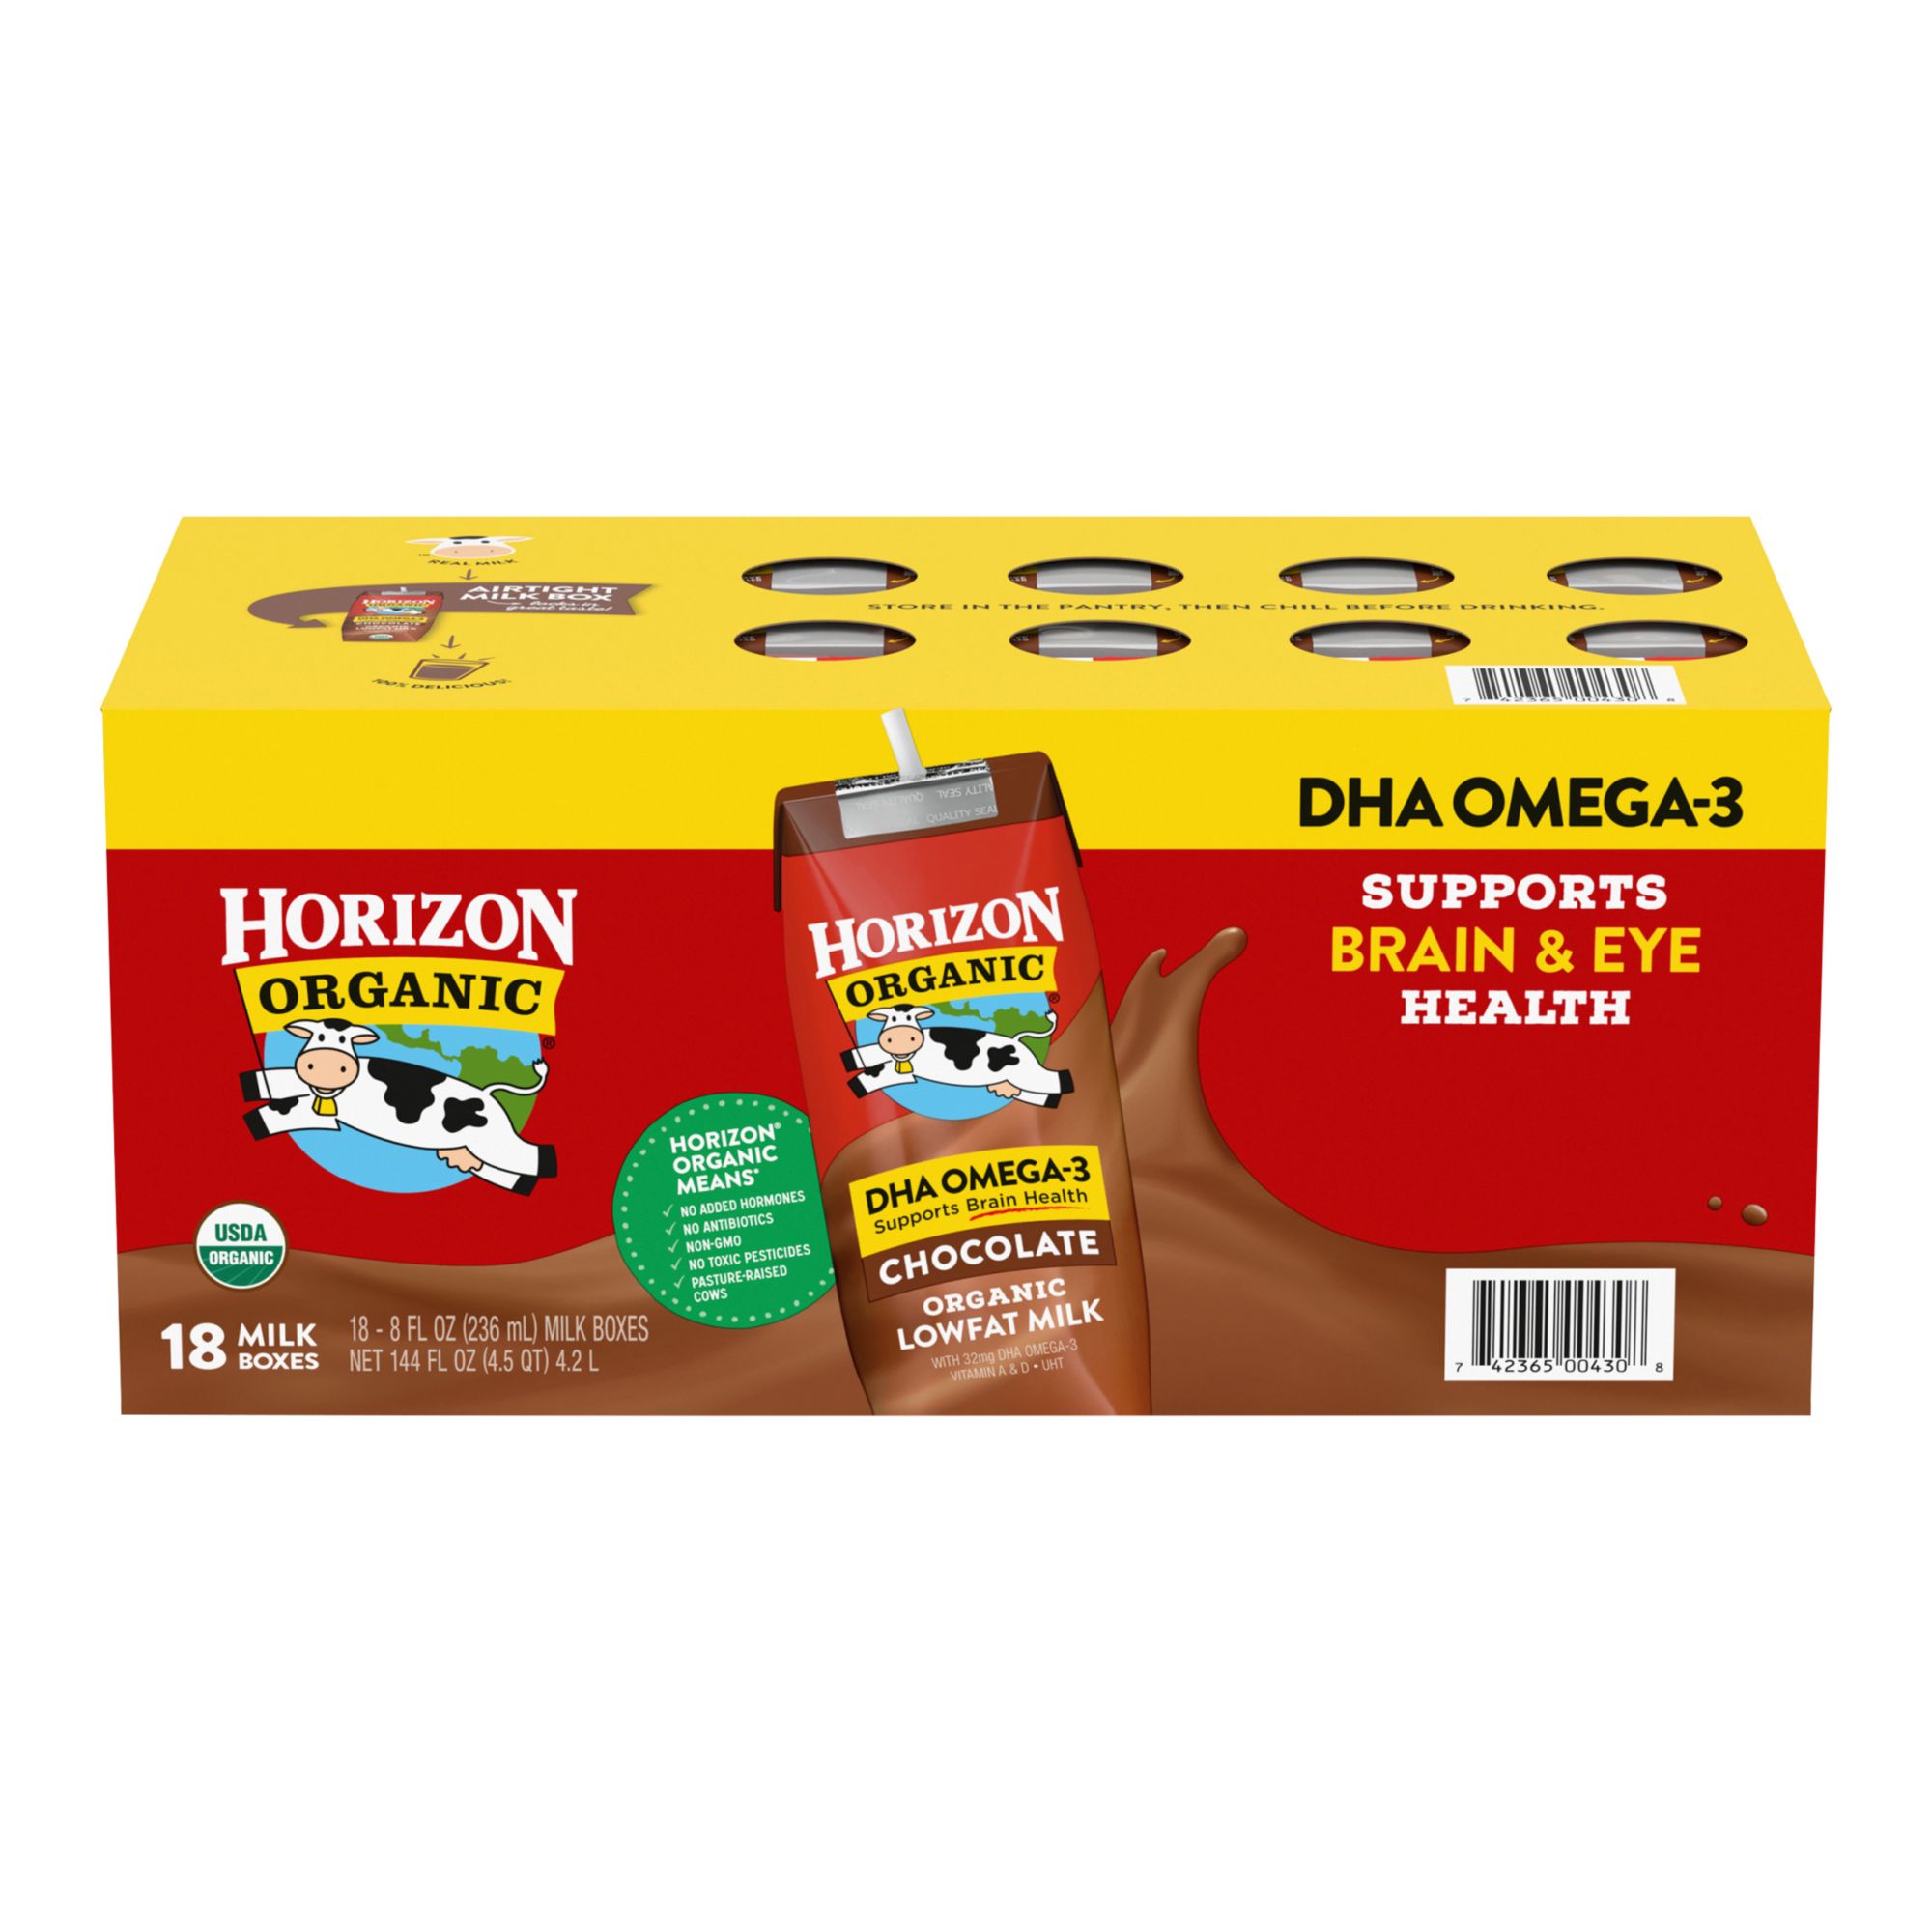 Horizon Organic Whole Milk with DHA 64 oz | BJ's Wholesale Club